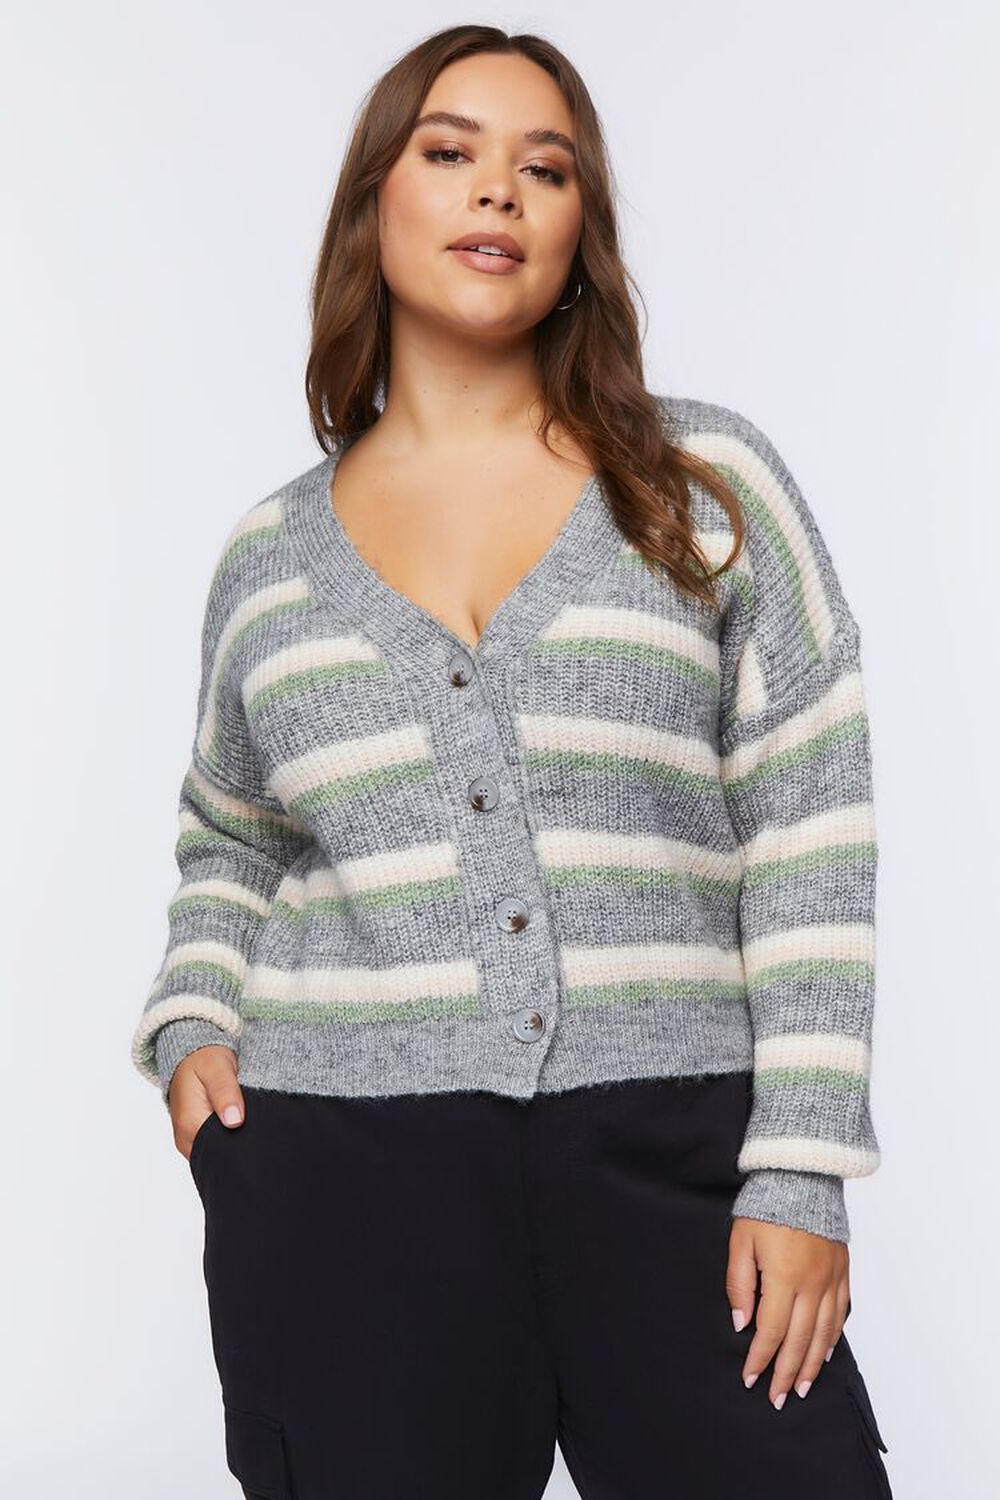 HEATHER GREY/MULTI Plus Size Striped Cardigan Sweater, image 1